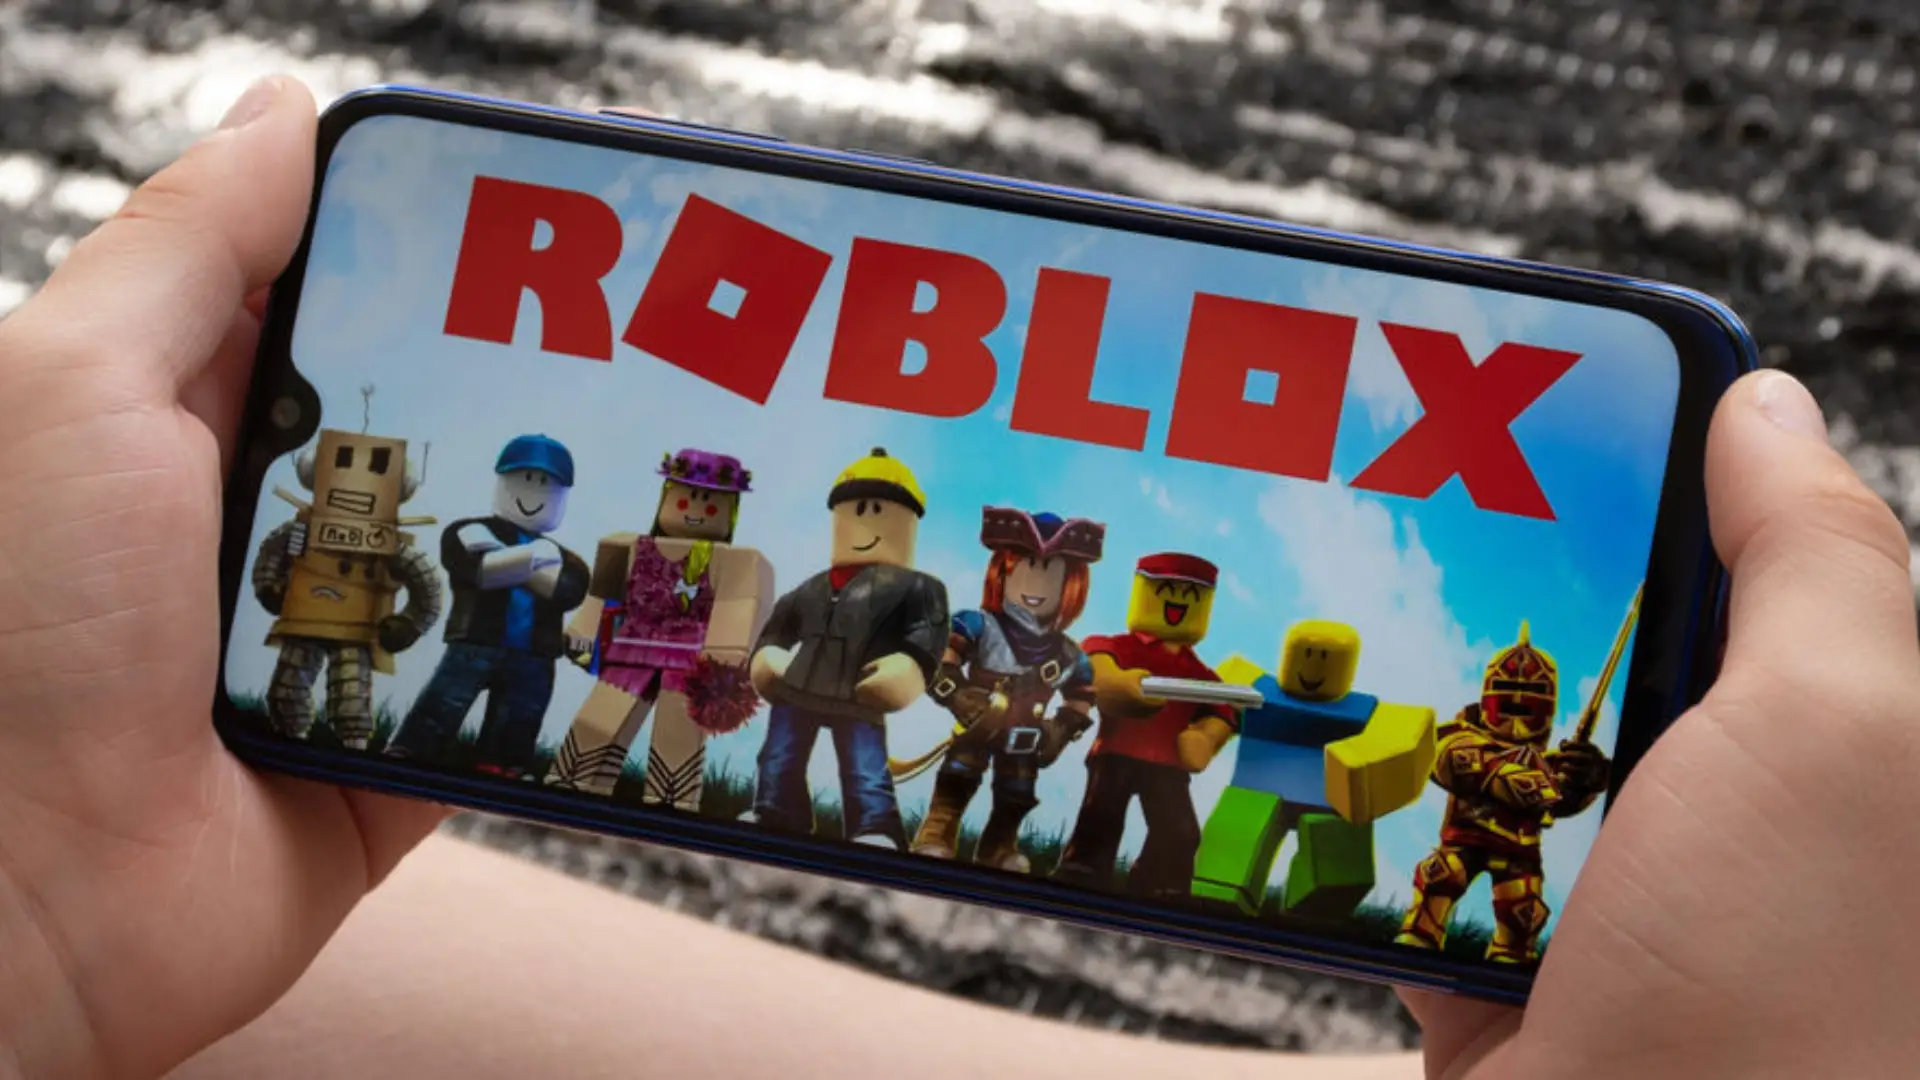 Roblox Launches Creator Subscriptions to Drive Revenue